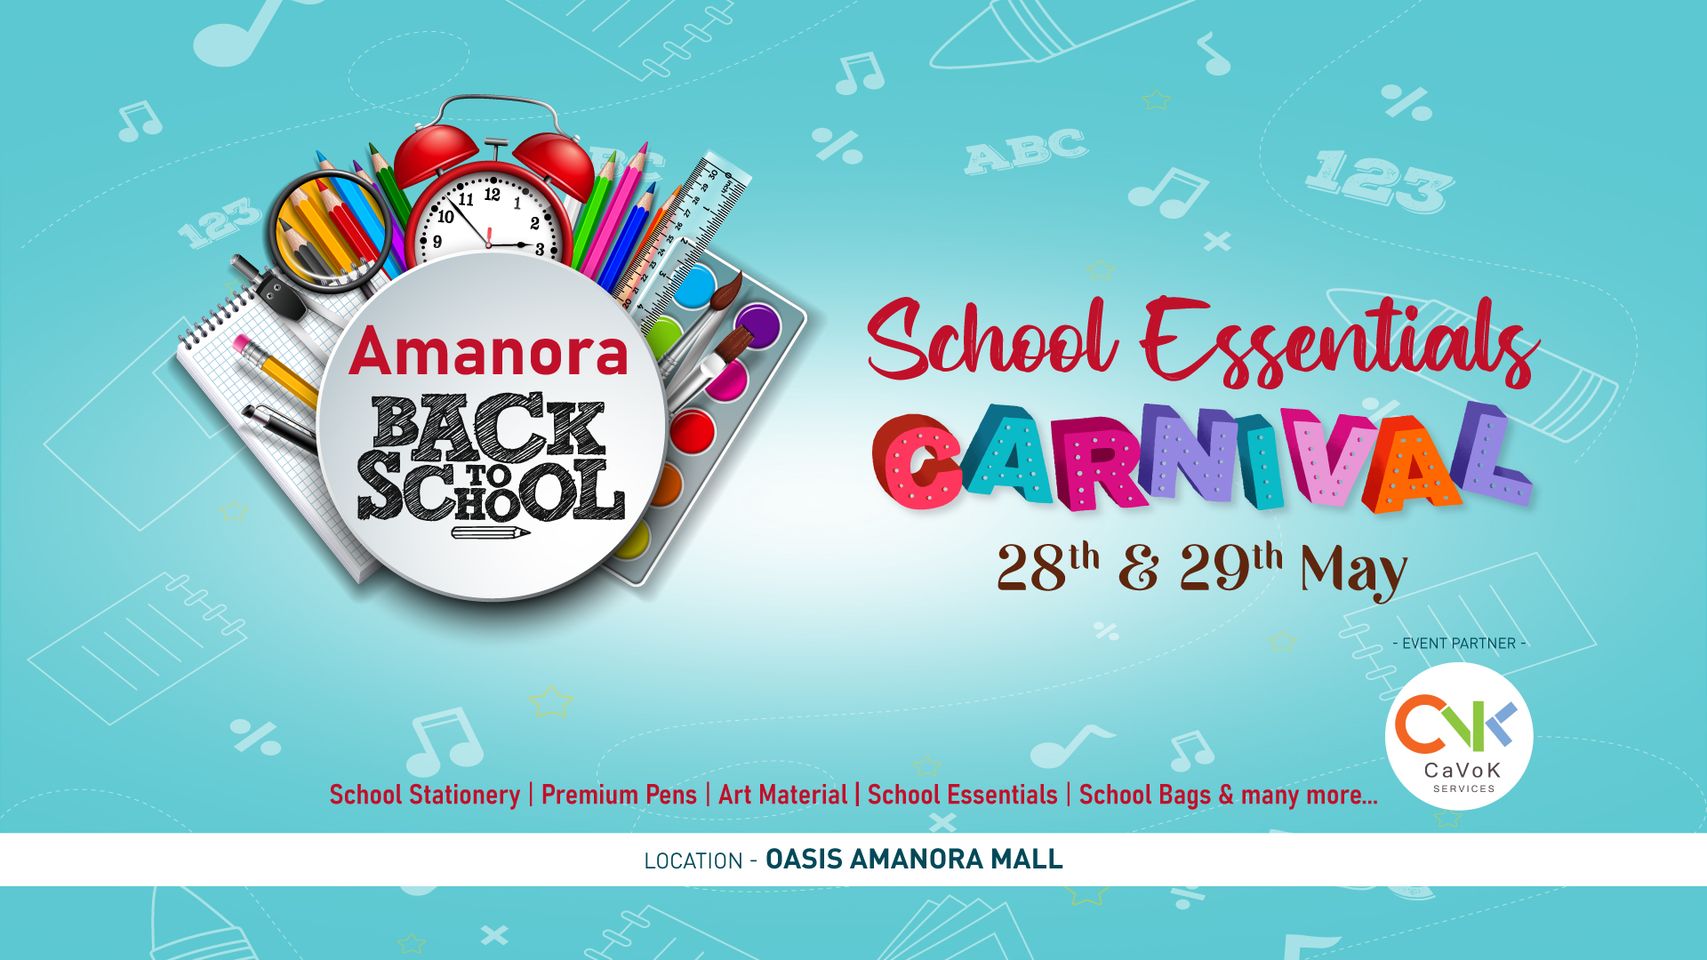 School Essentials Carnival at Amanora Mall